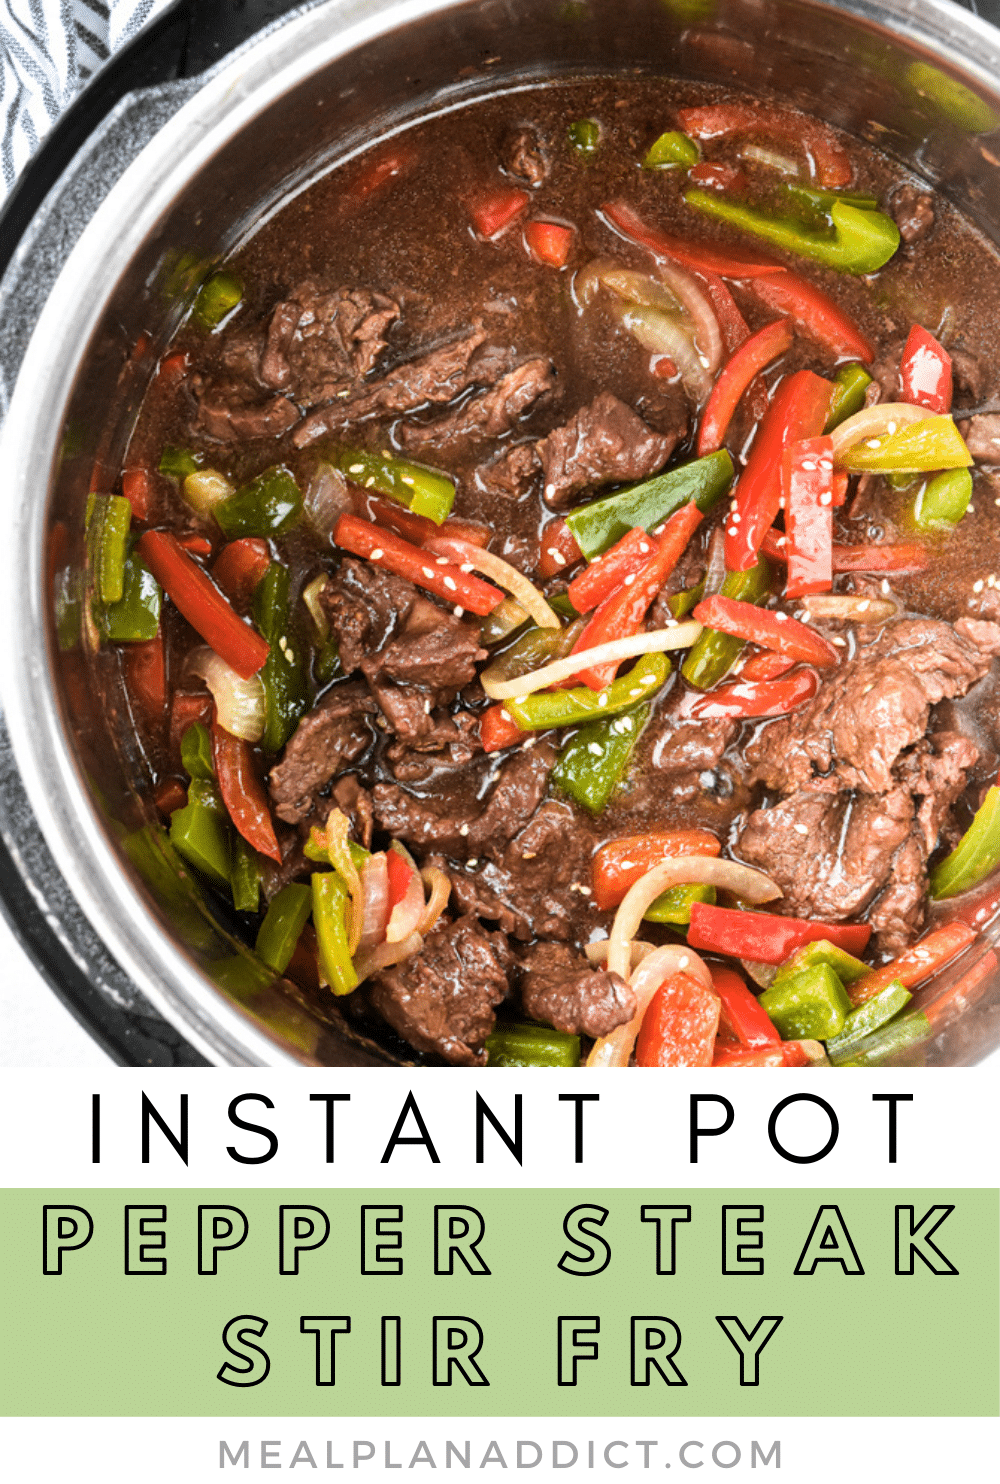 How to Make Easy Instant Pot Pepper Steak Stir Fry | Meal Plan Addict